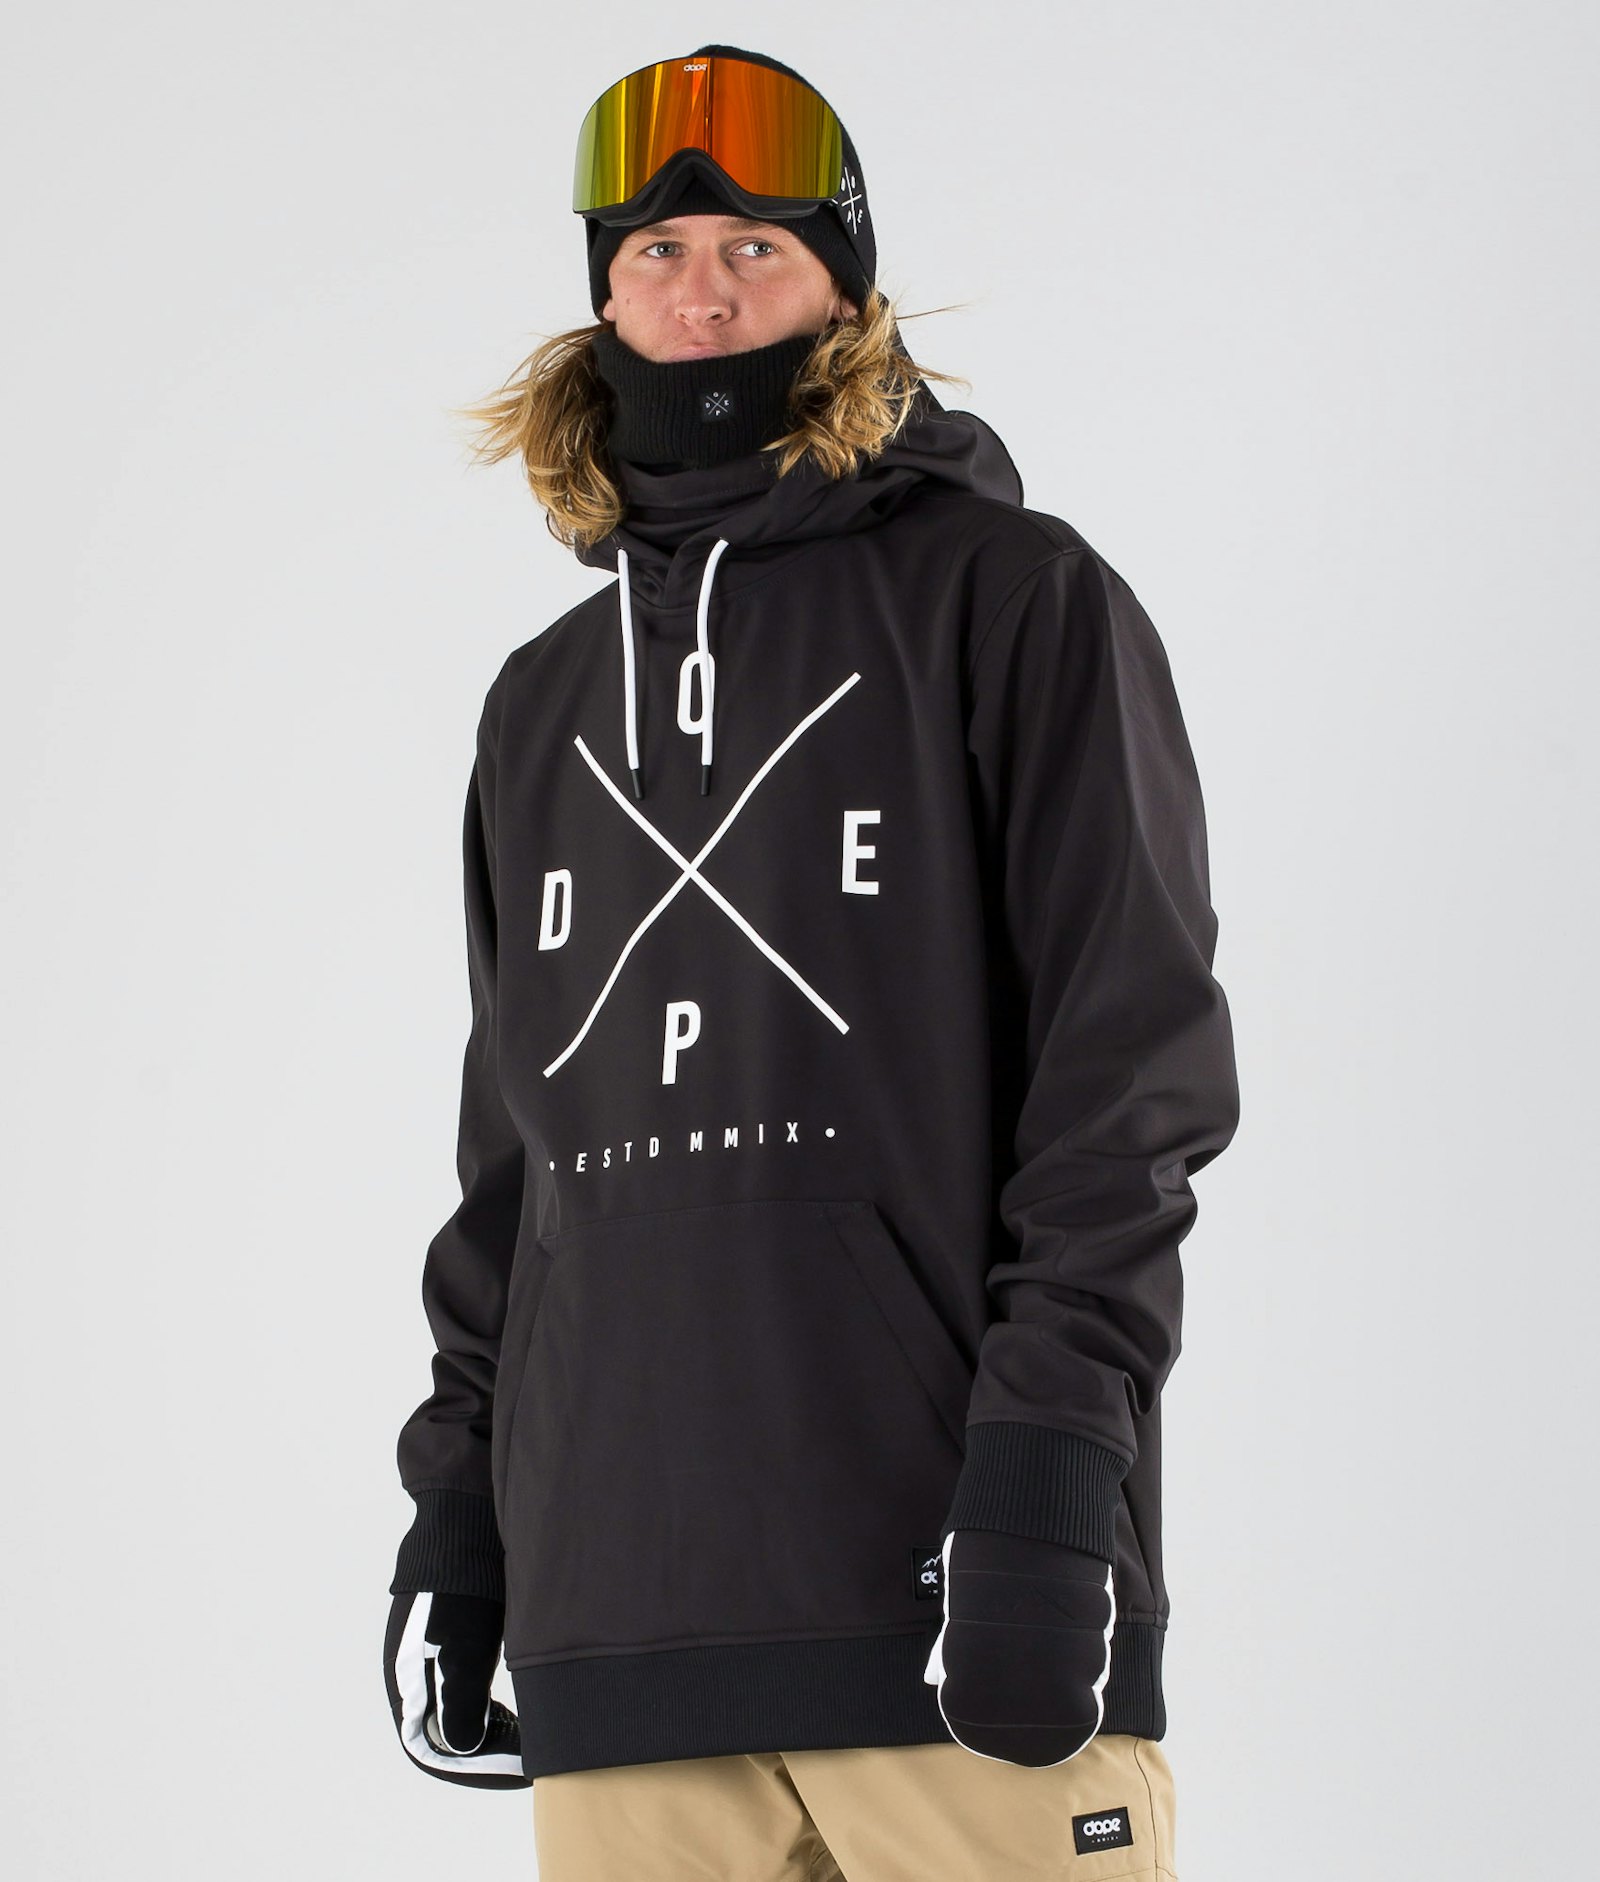 Dope Yeti Snowboard Jacket Men Black